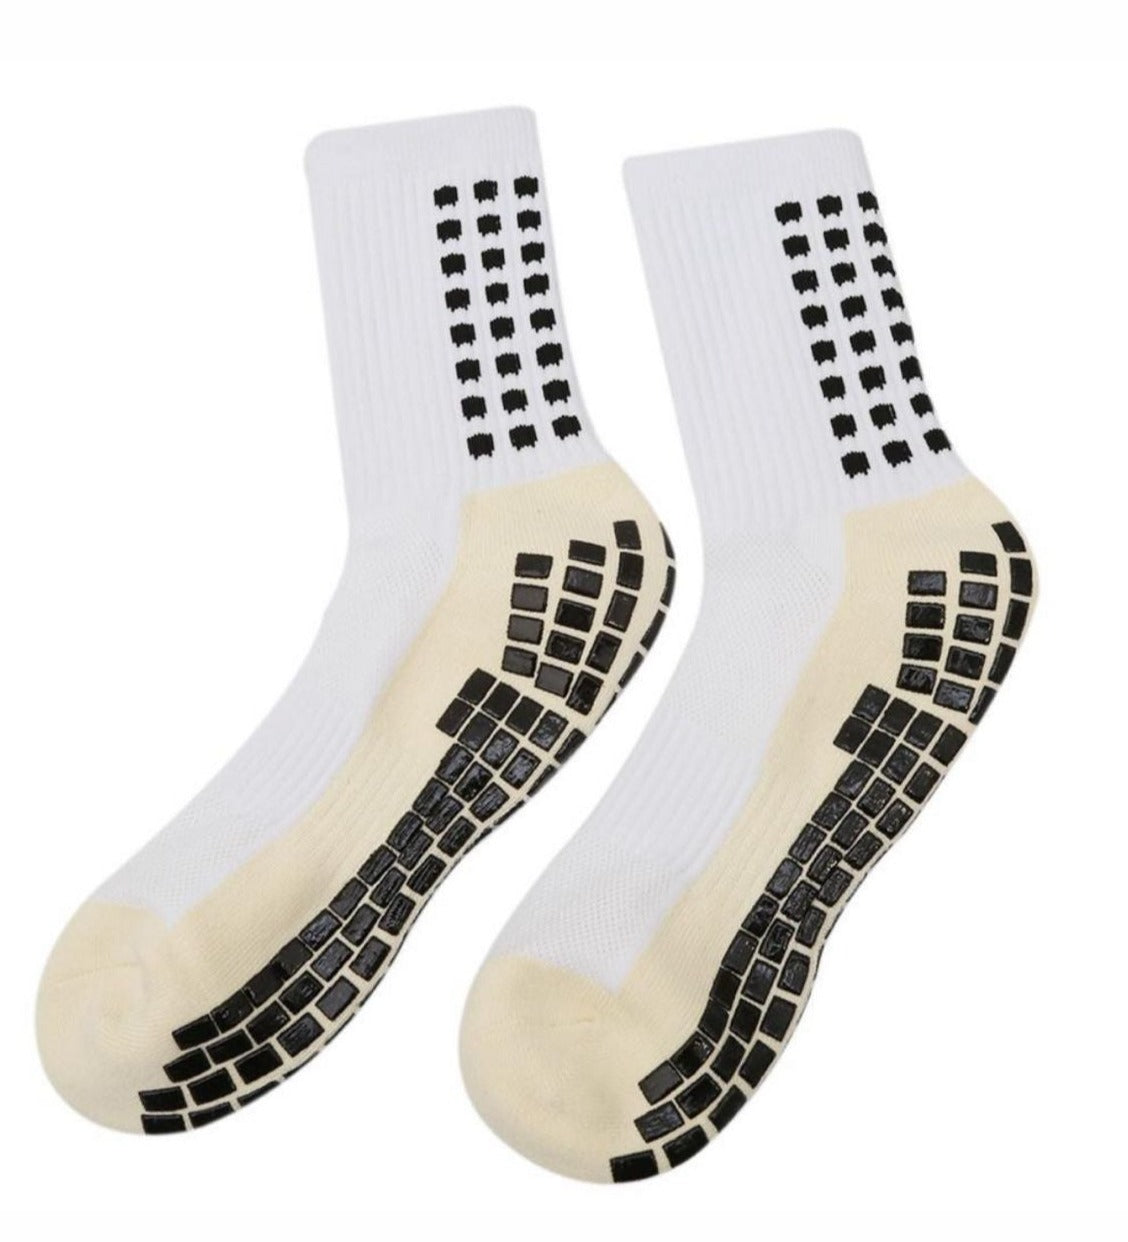 White - PRE-ORDER Shipped 28th March - Stepzz Grip Socks